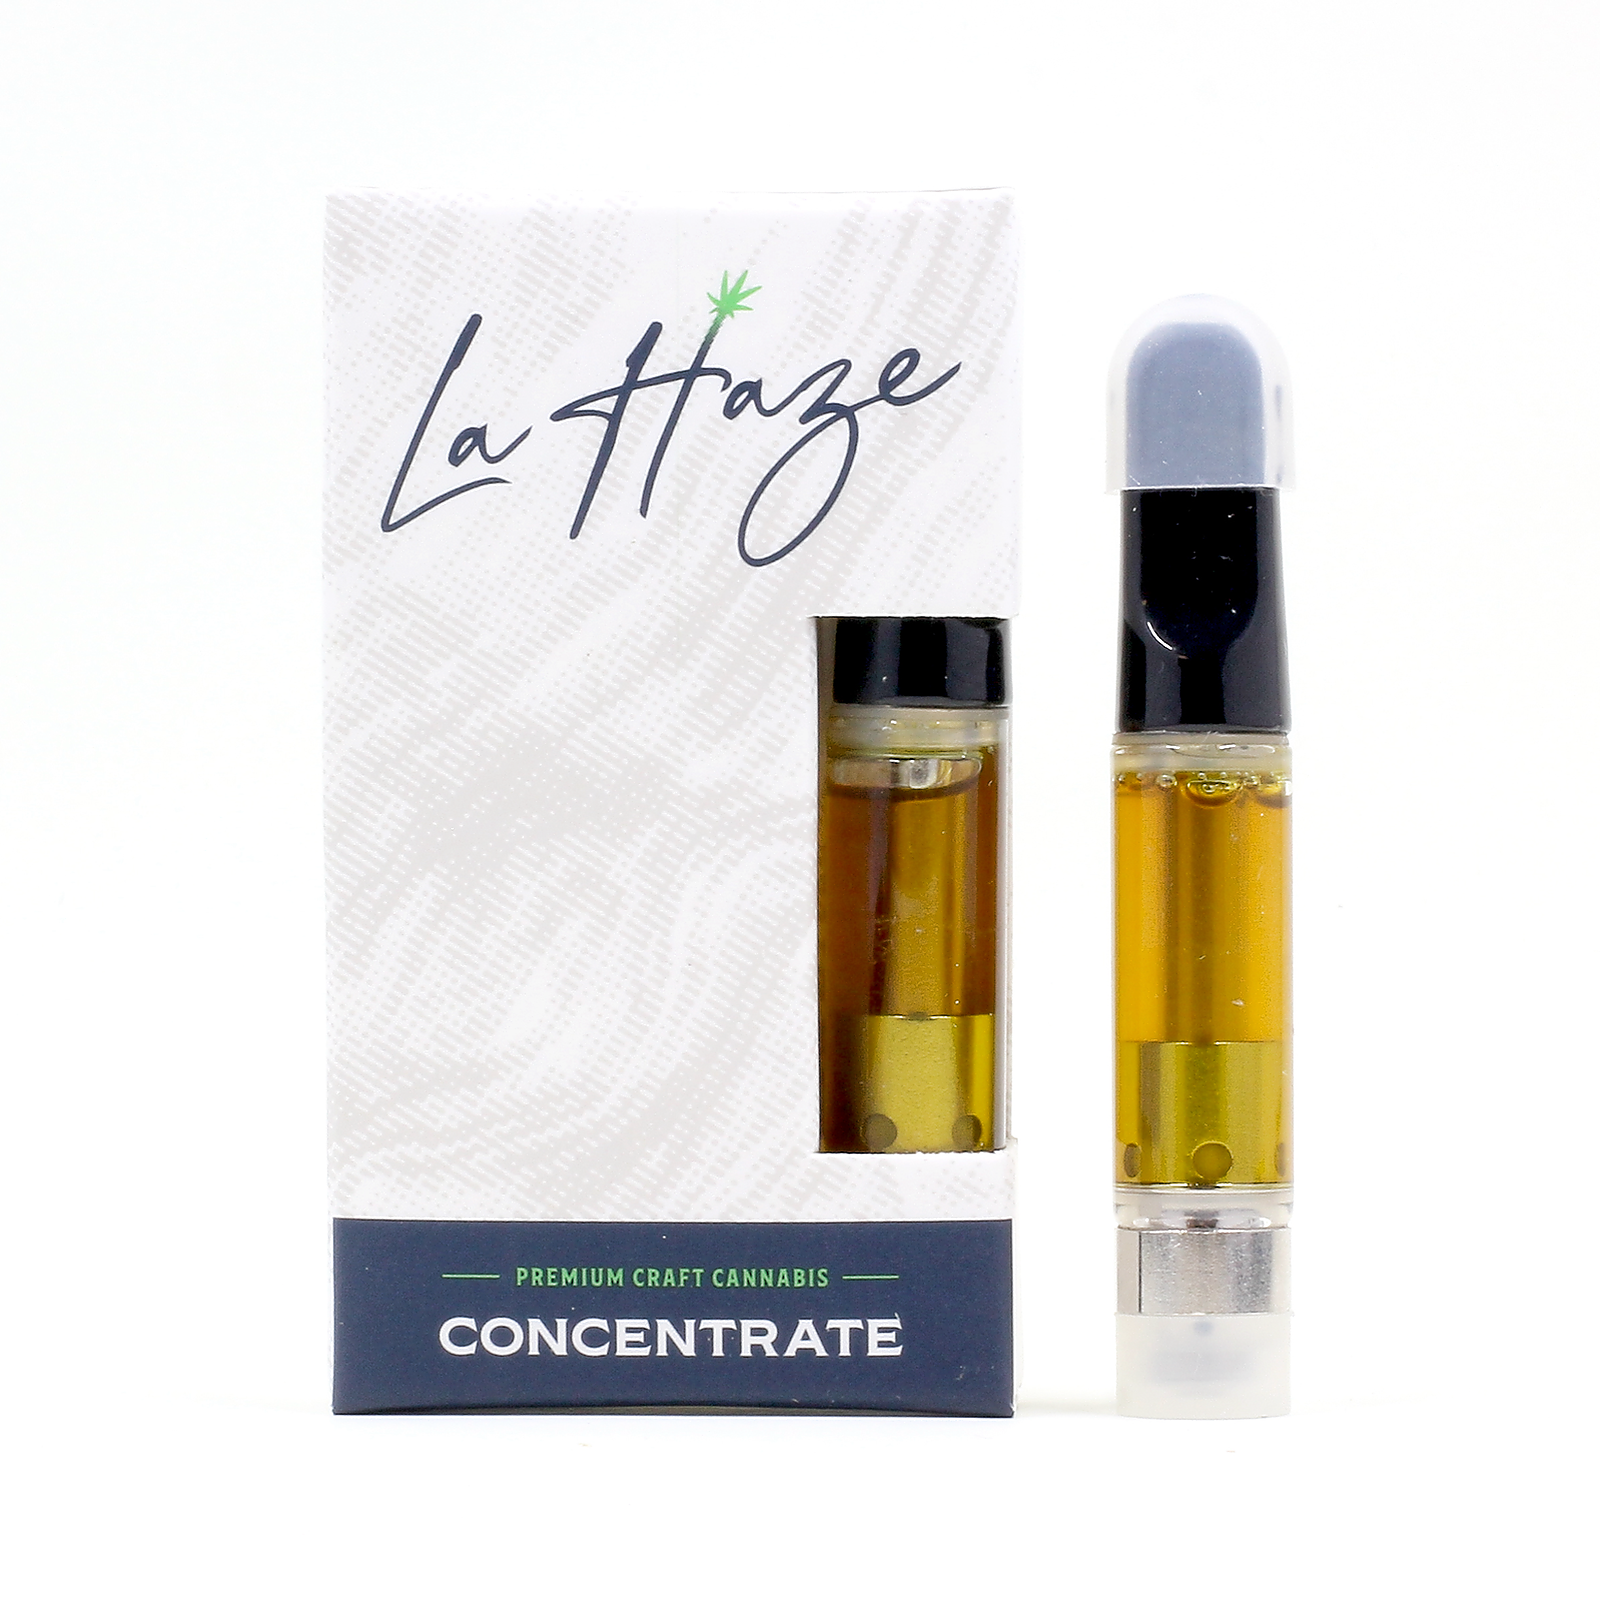 Concentrates - LaHaze Cannabis